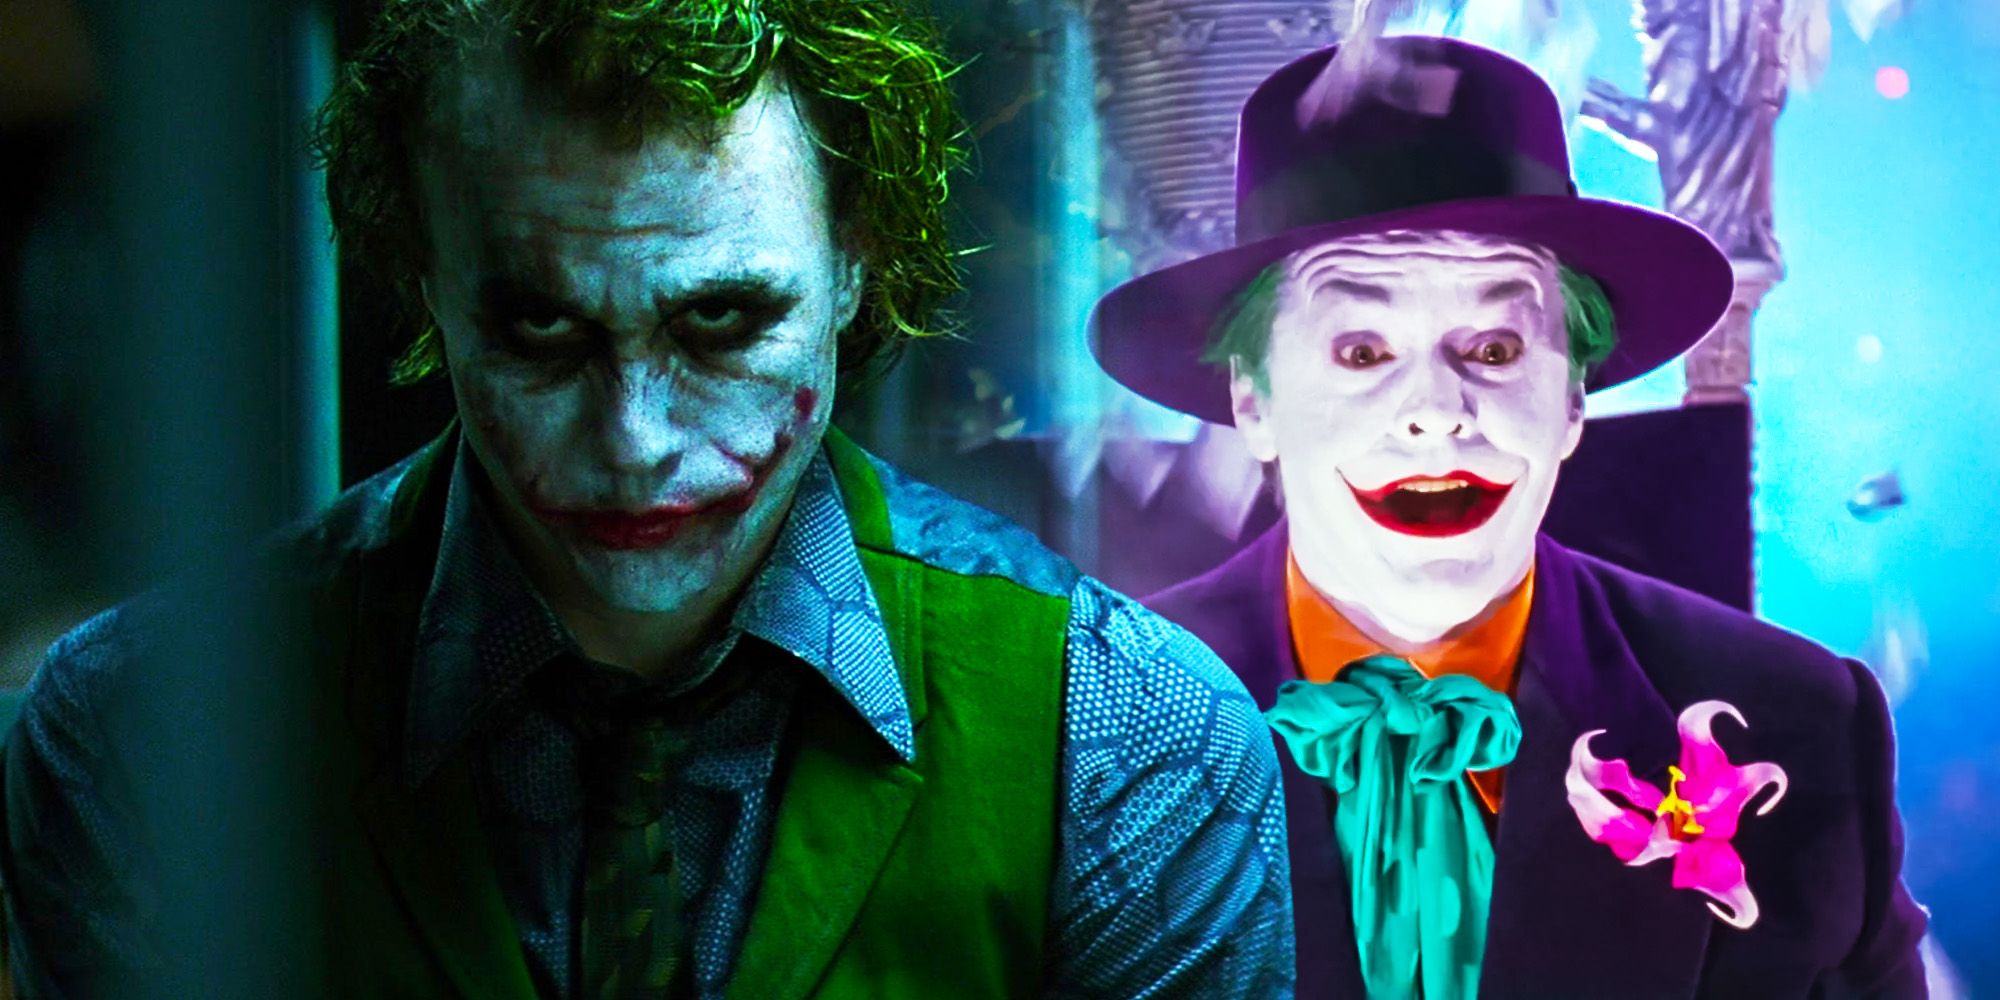 Split Image: Heath Ledger's Joker stares ominously while behind bars; Jack Nicholson's Joker looks shocked and in awe